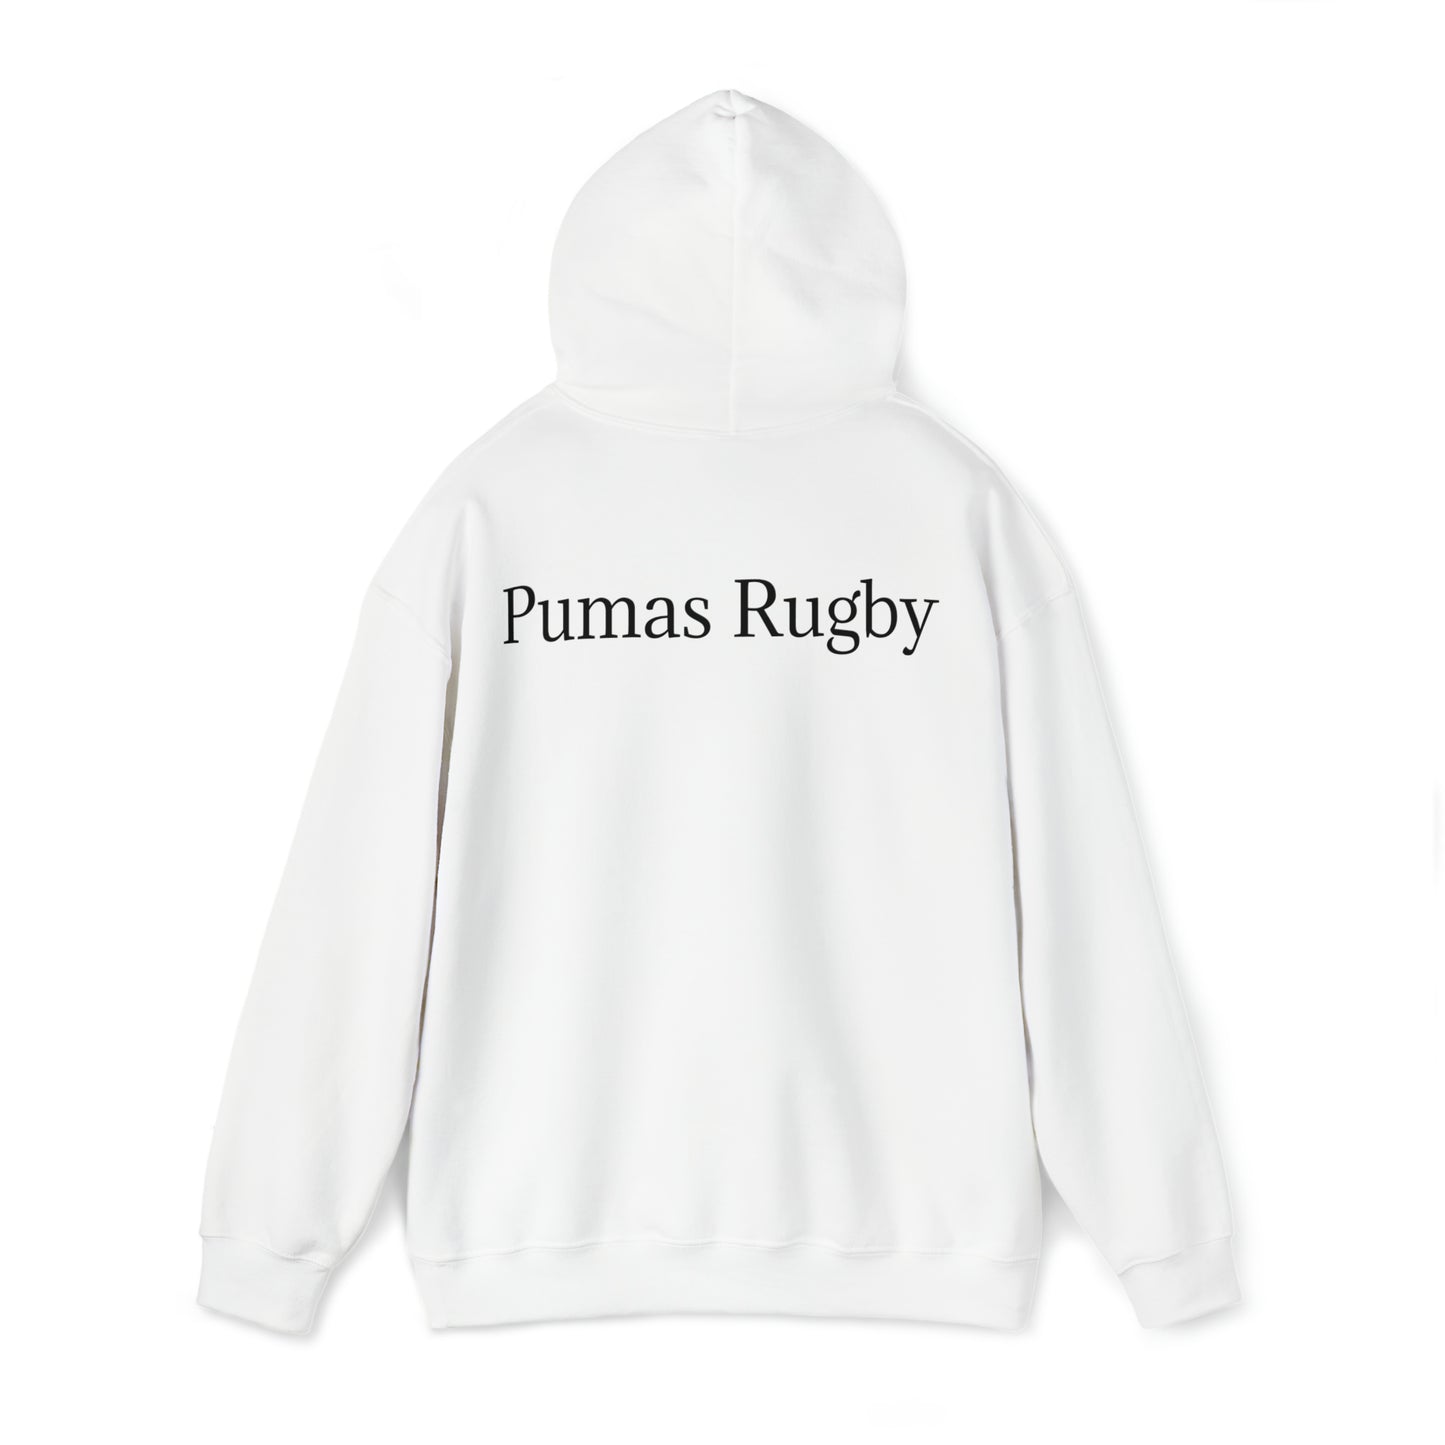 Pumas RWC photoshoot - light hoodies